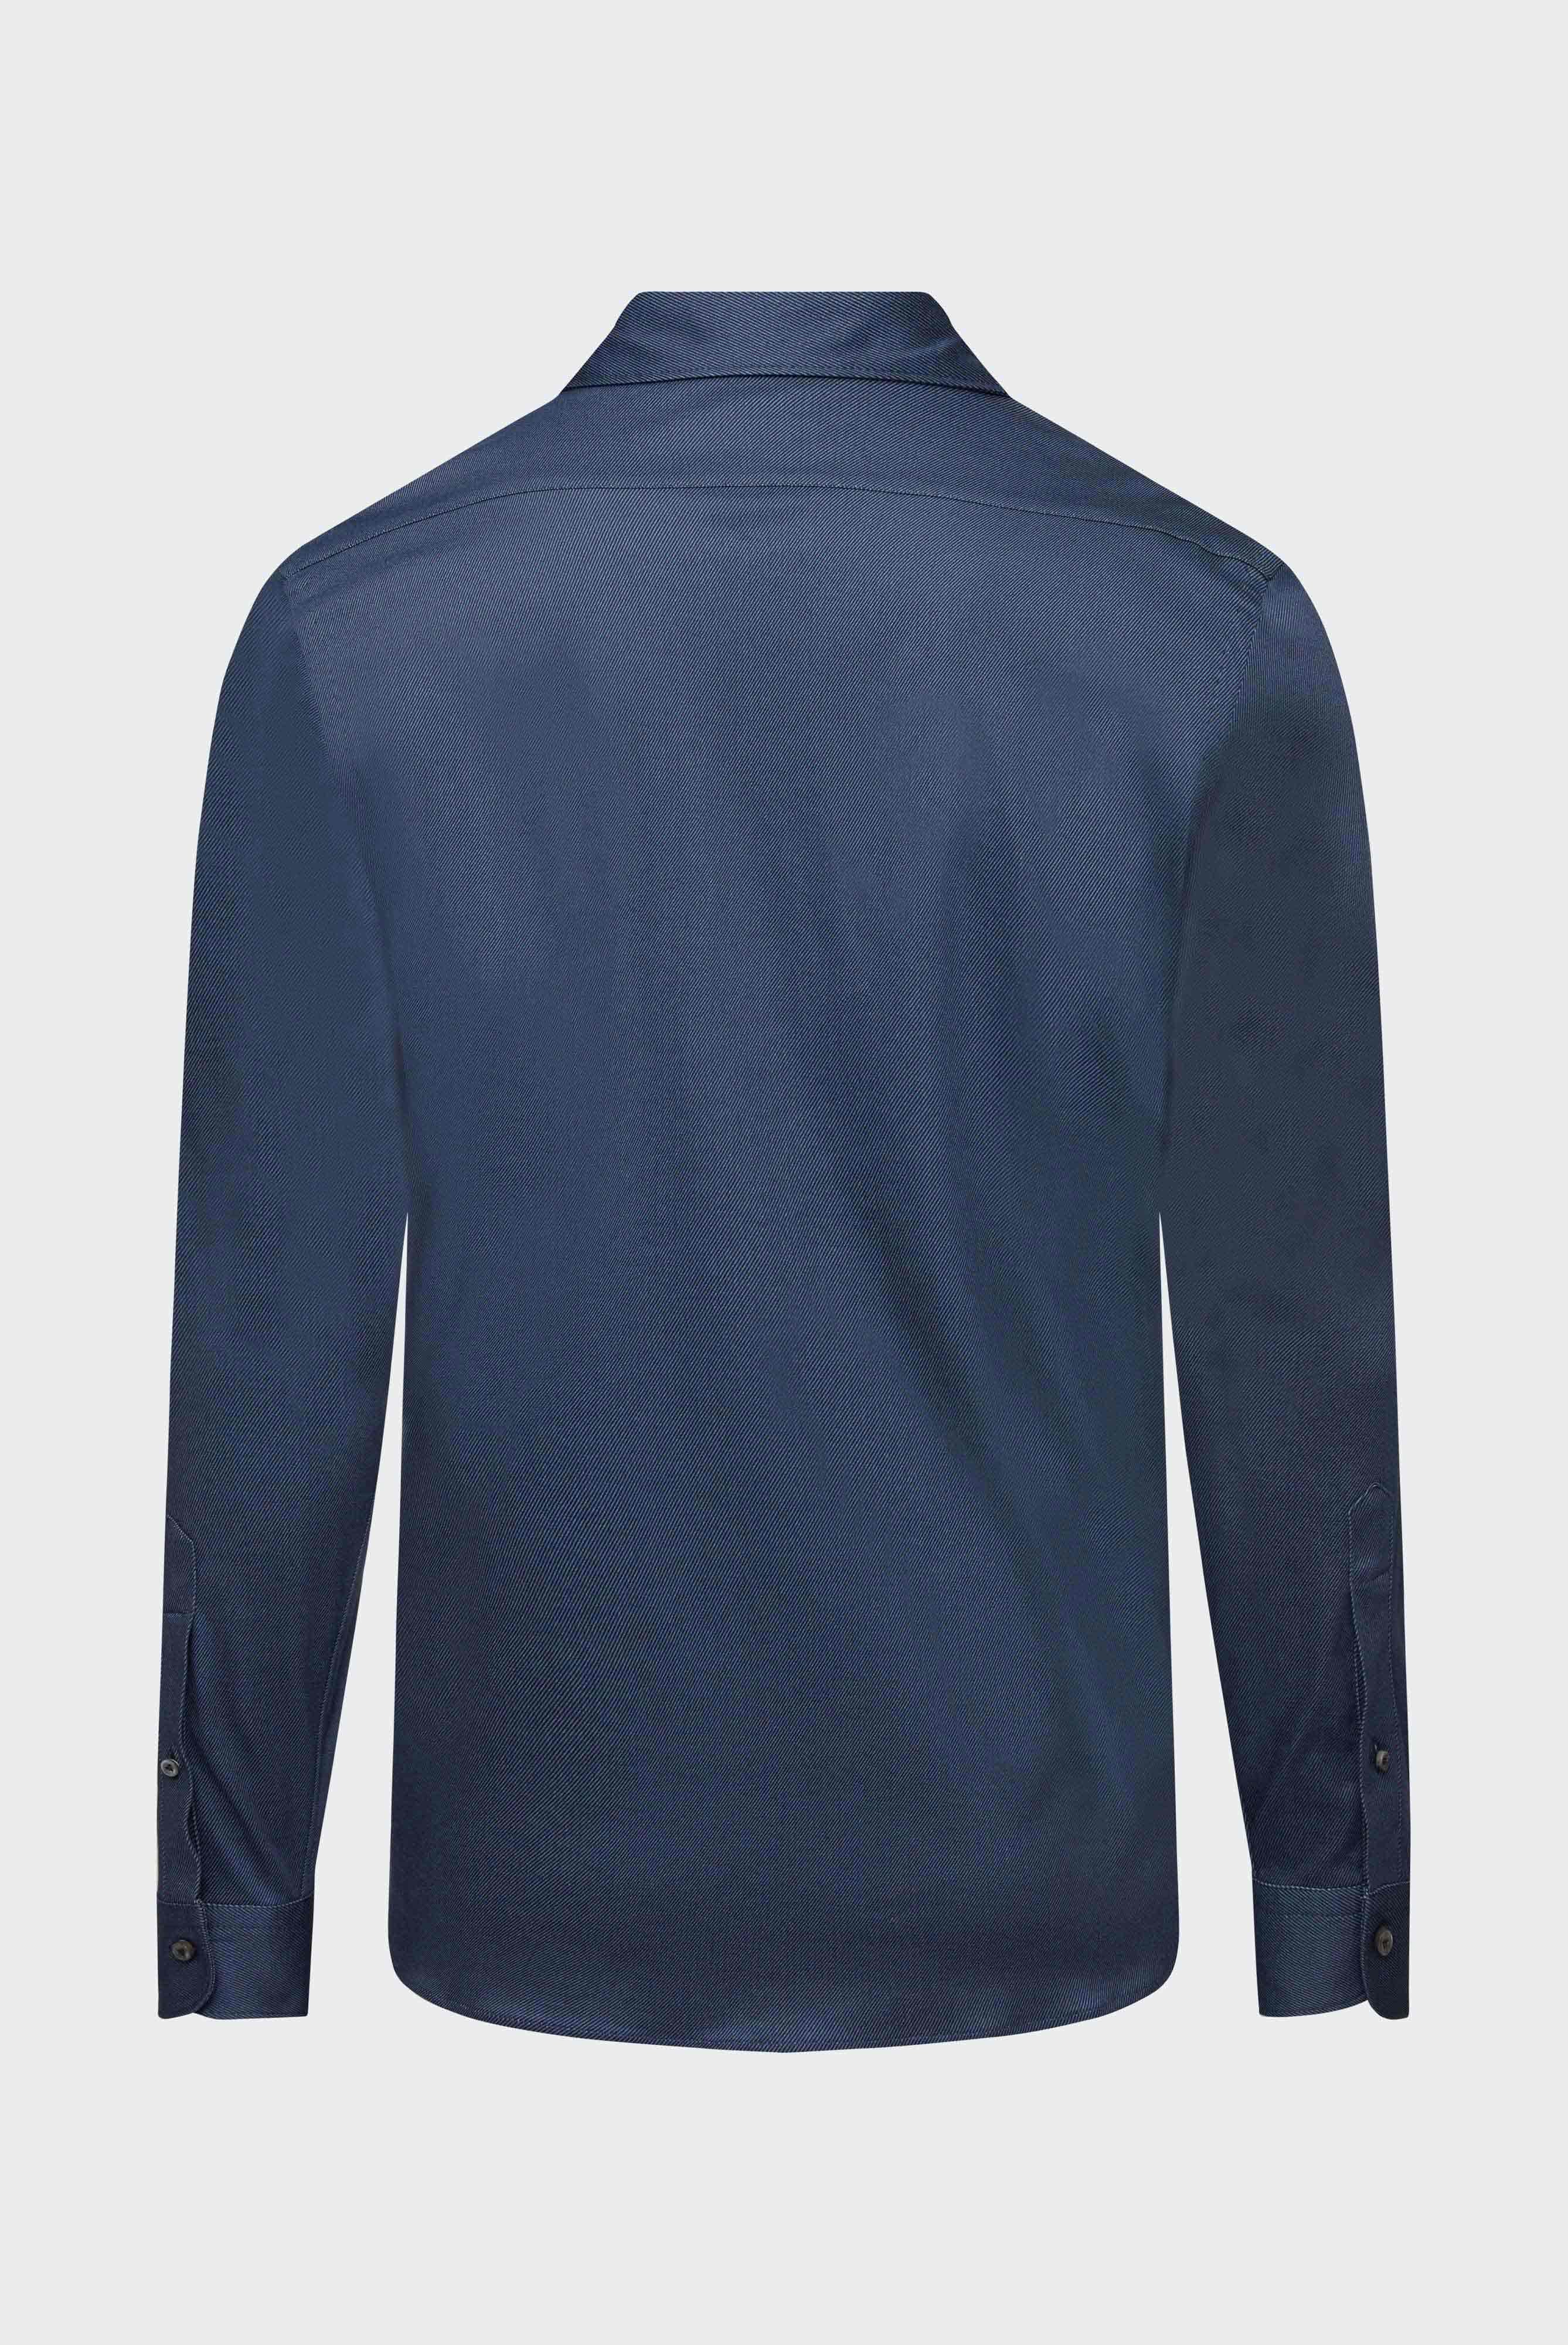 Casual Hemden+Jersey Hemd mit Twill Druck Tailor Fit+20.1683.UC.187749.782.M